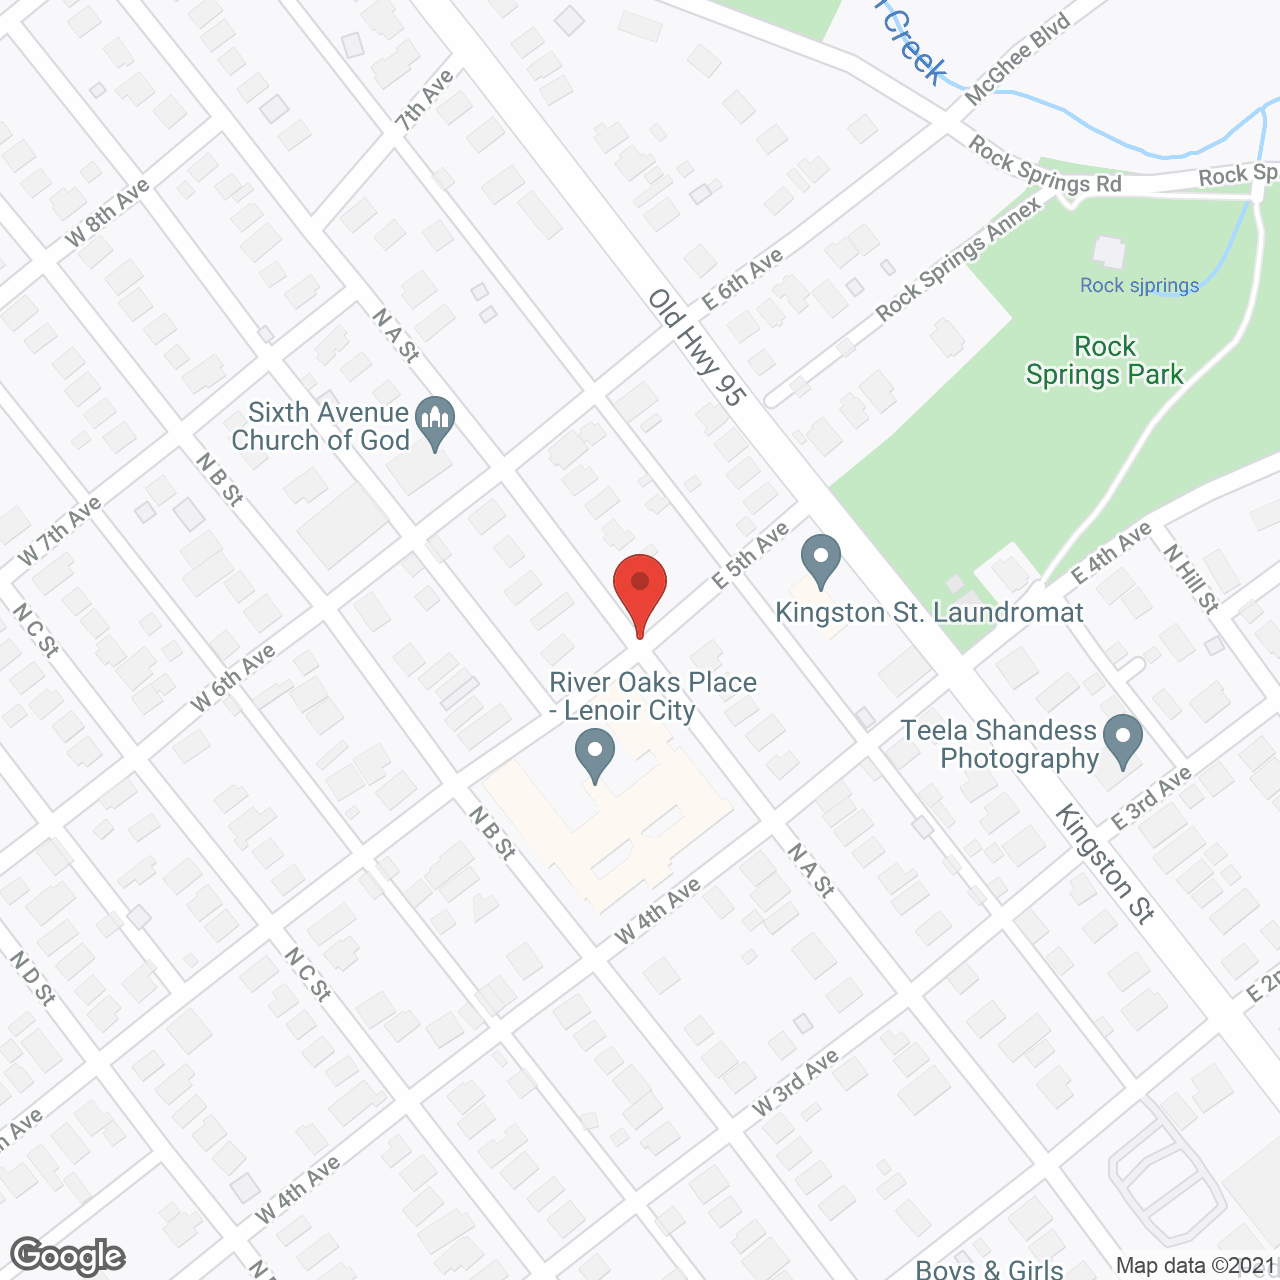 River Oaks Place - Lenoir City in google map